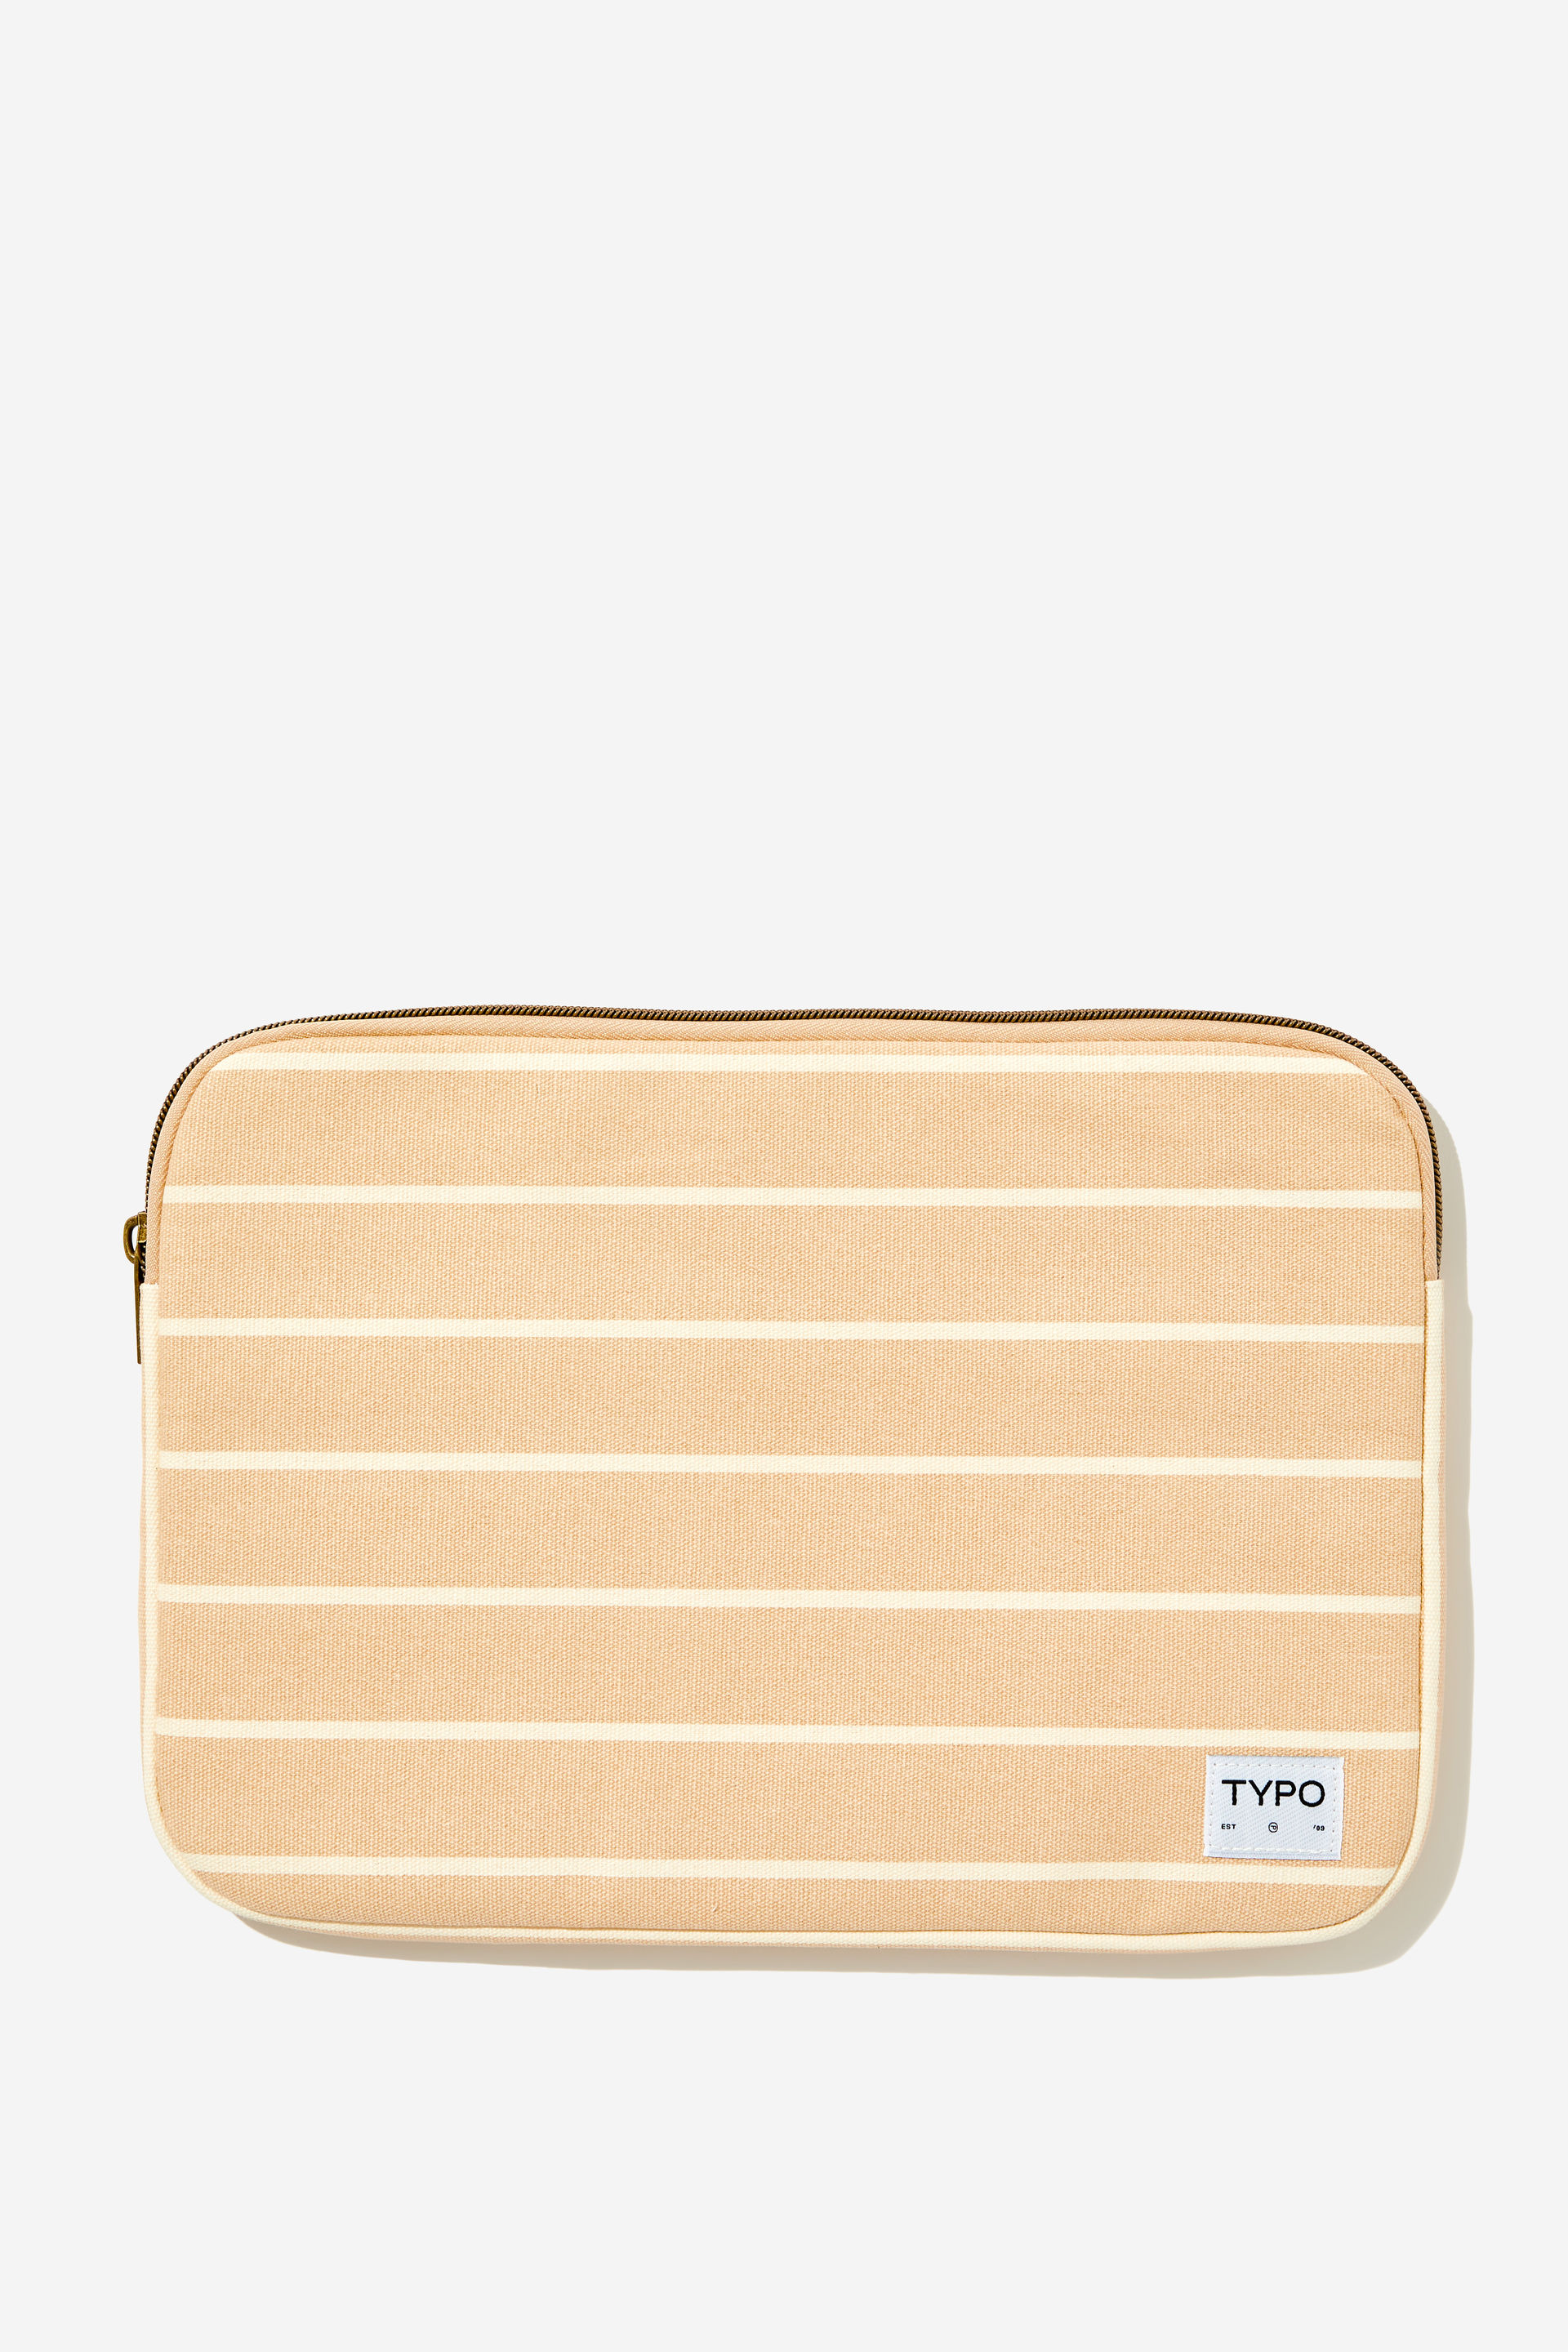 Typo - Take Me Away 13 Inch Laptop Case - Varsity stripe/ latte & ecru